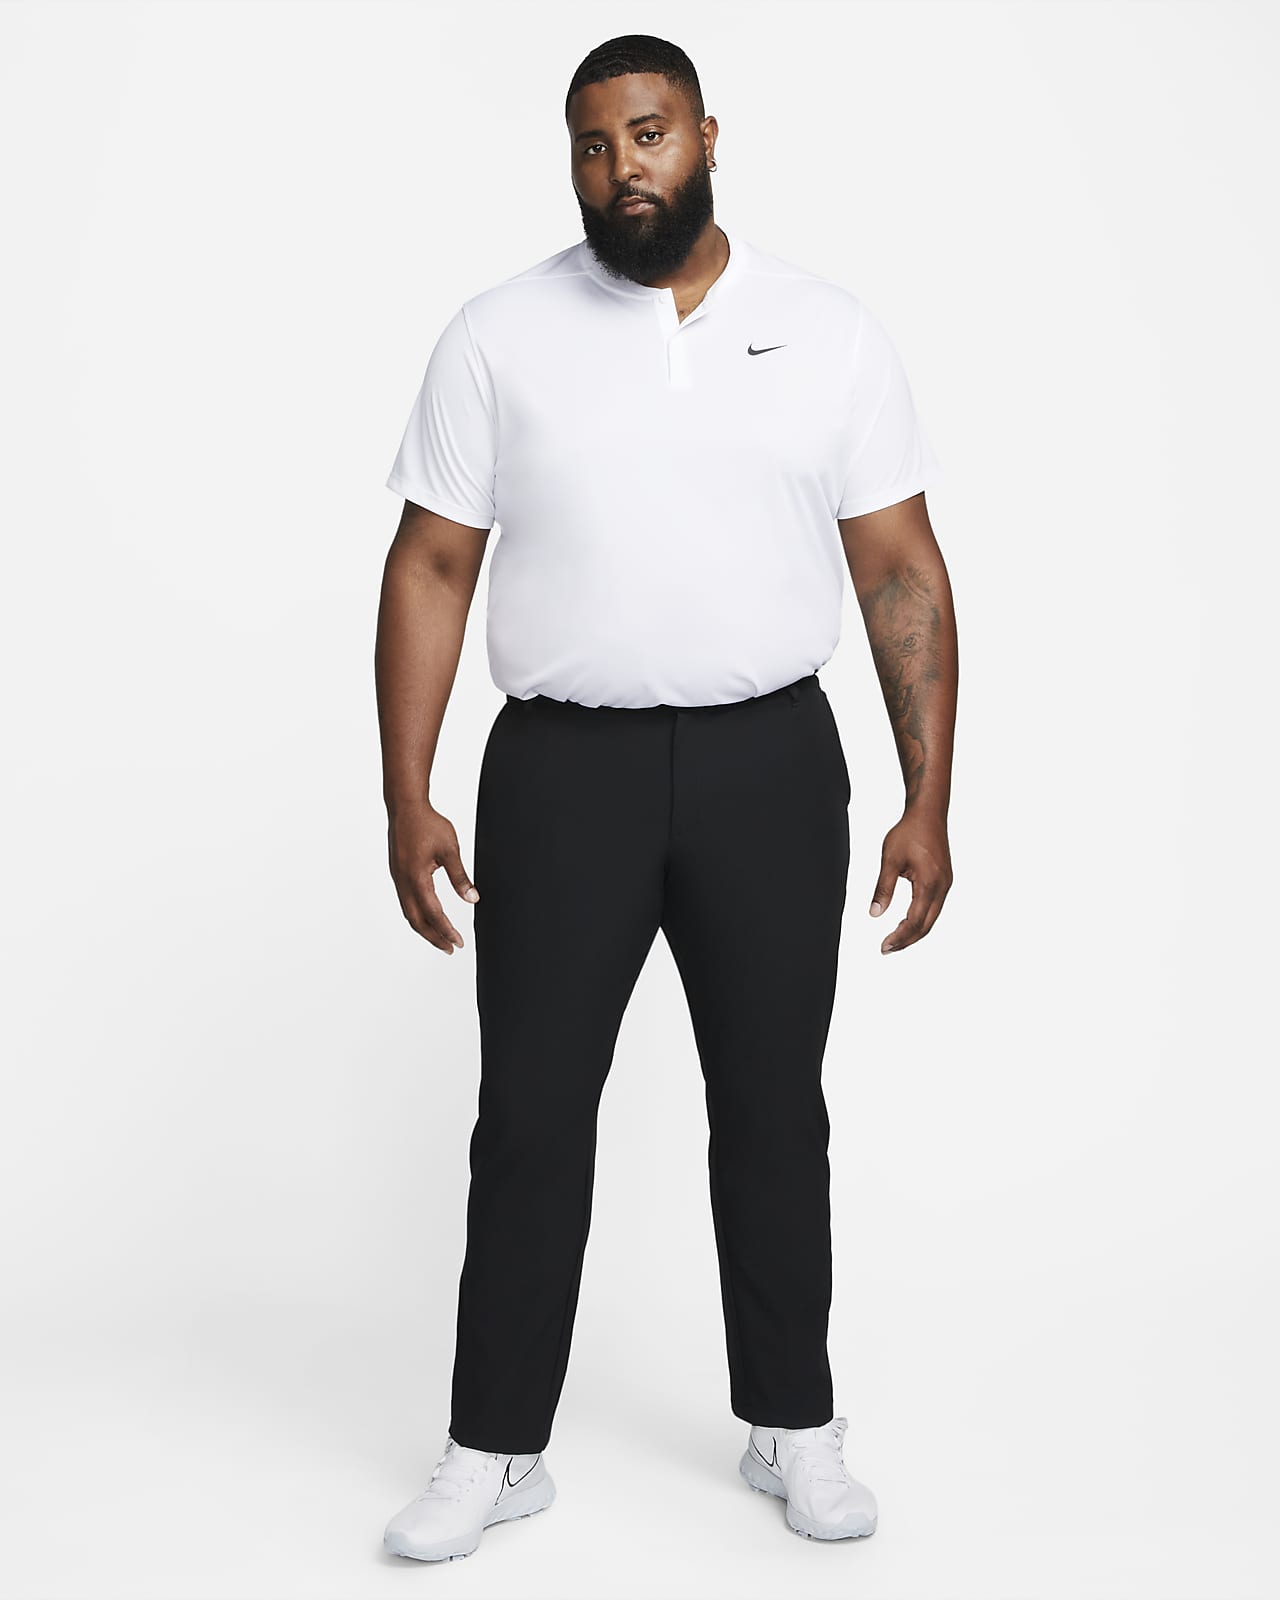 Women's Plus Size Golf Clothing. Nike BG